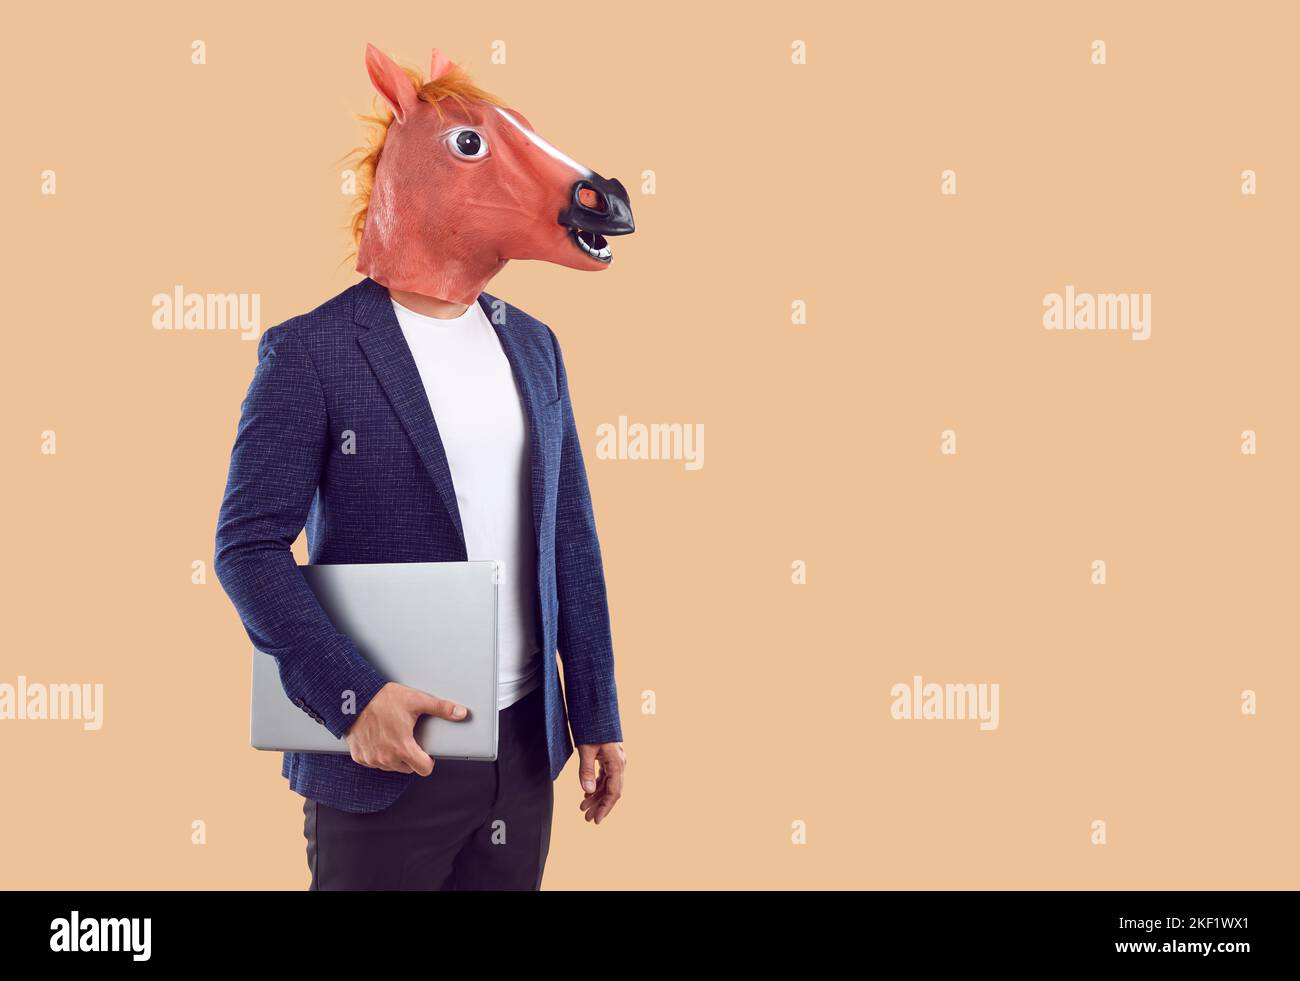 Freak bizarre anonymous guy with horse head holding laptop isolated on beige background. Stock Photo